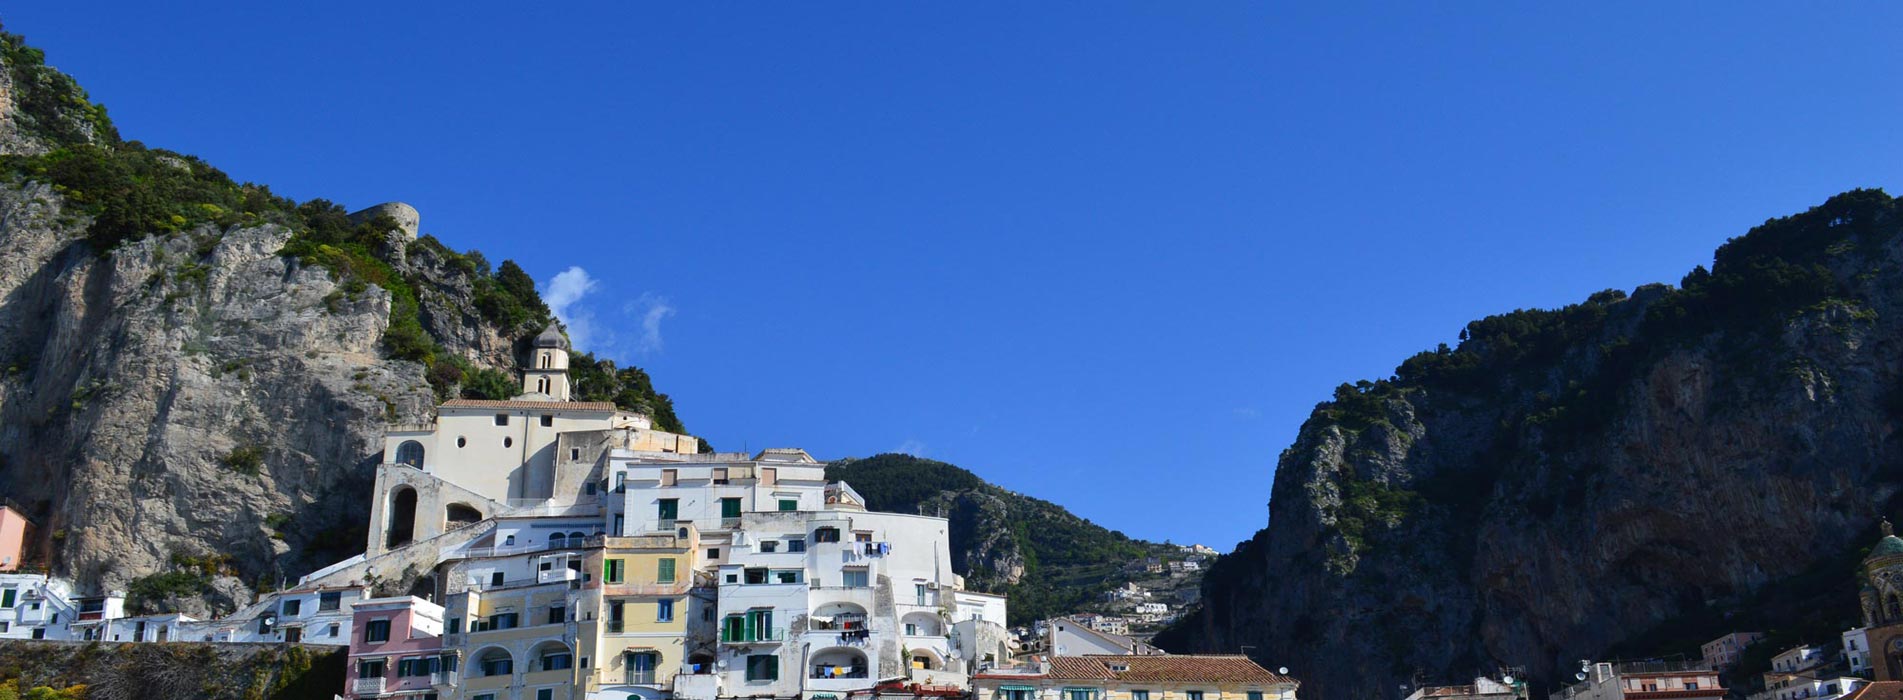 Amalfi, Ausgangspunkt der Wanderung nach Ravello